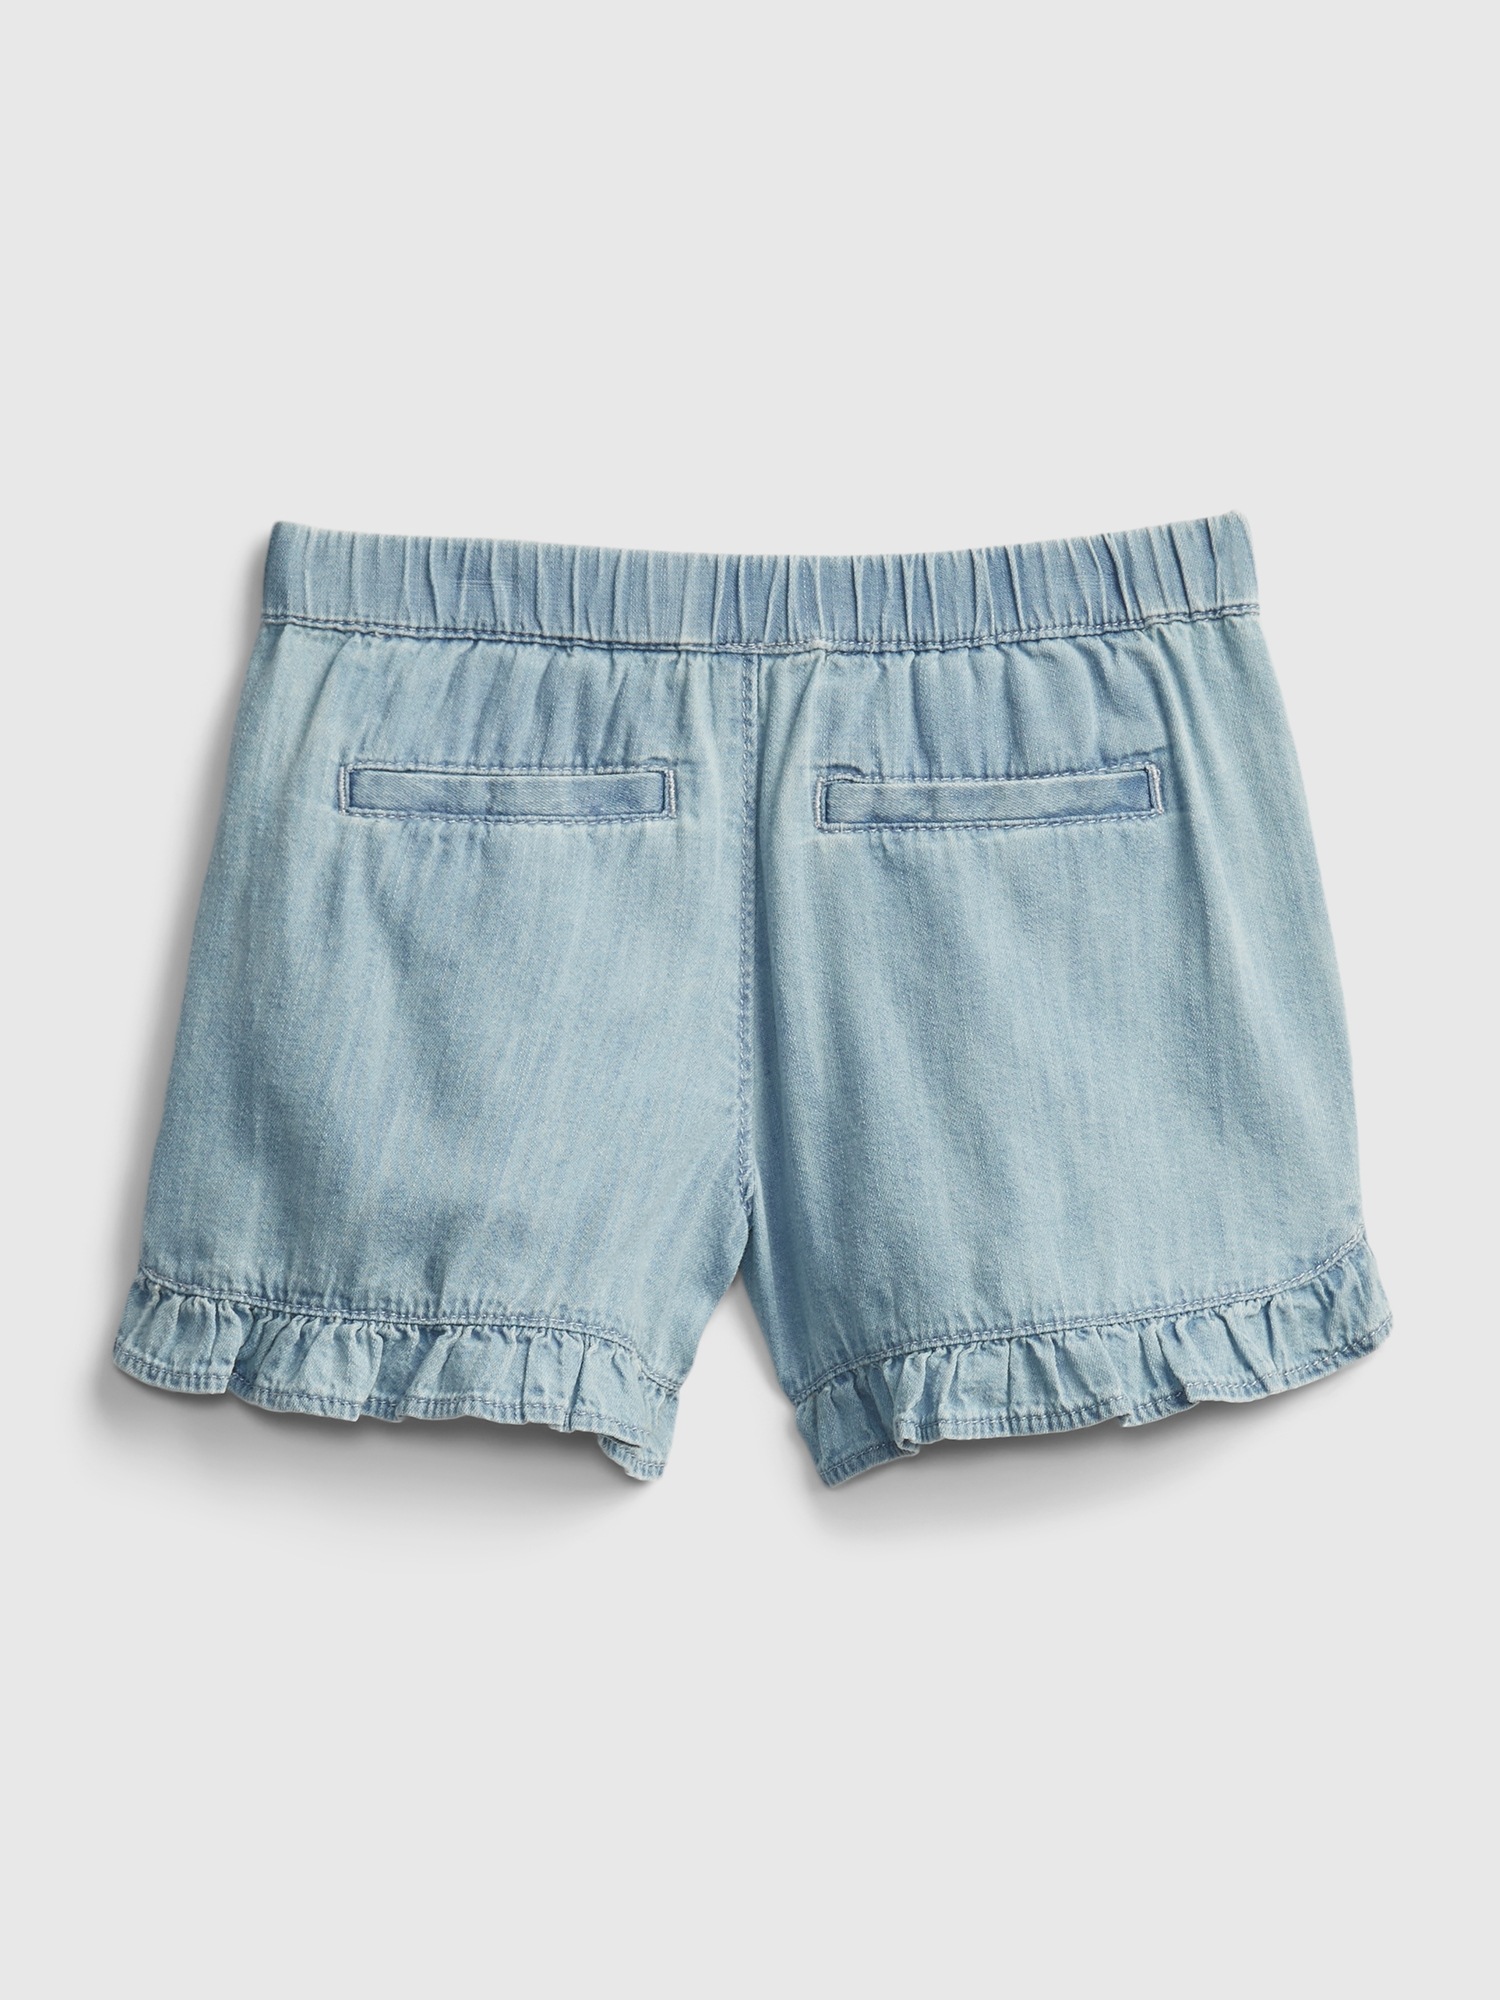 Kids Ruffle Denim Pull-On Shorts | Gap